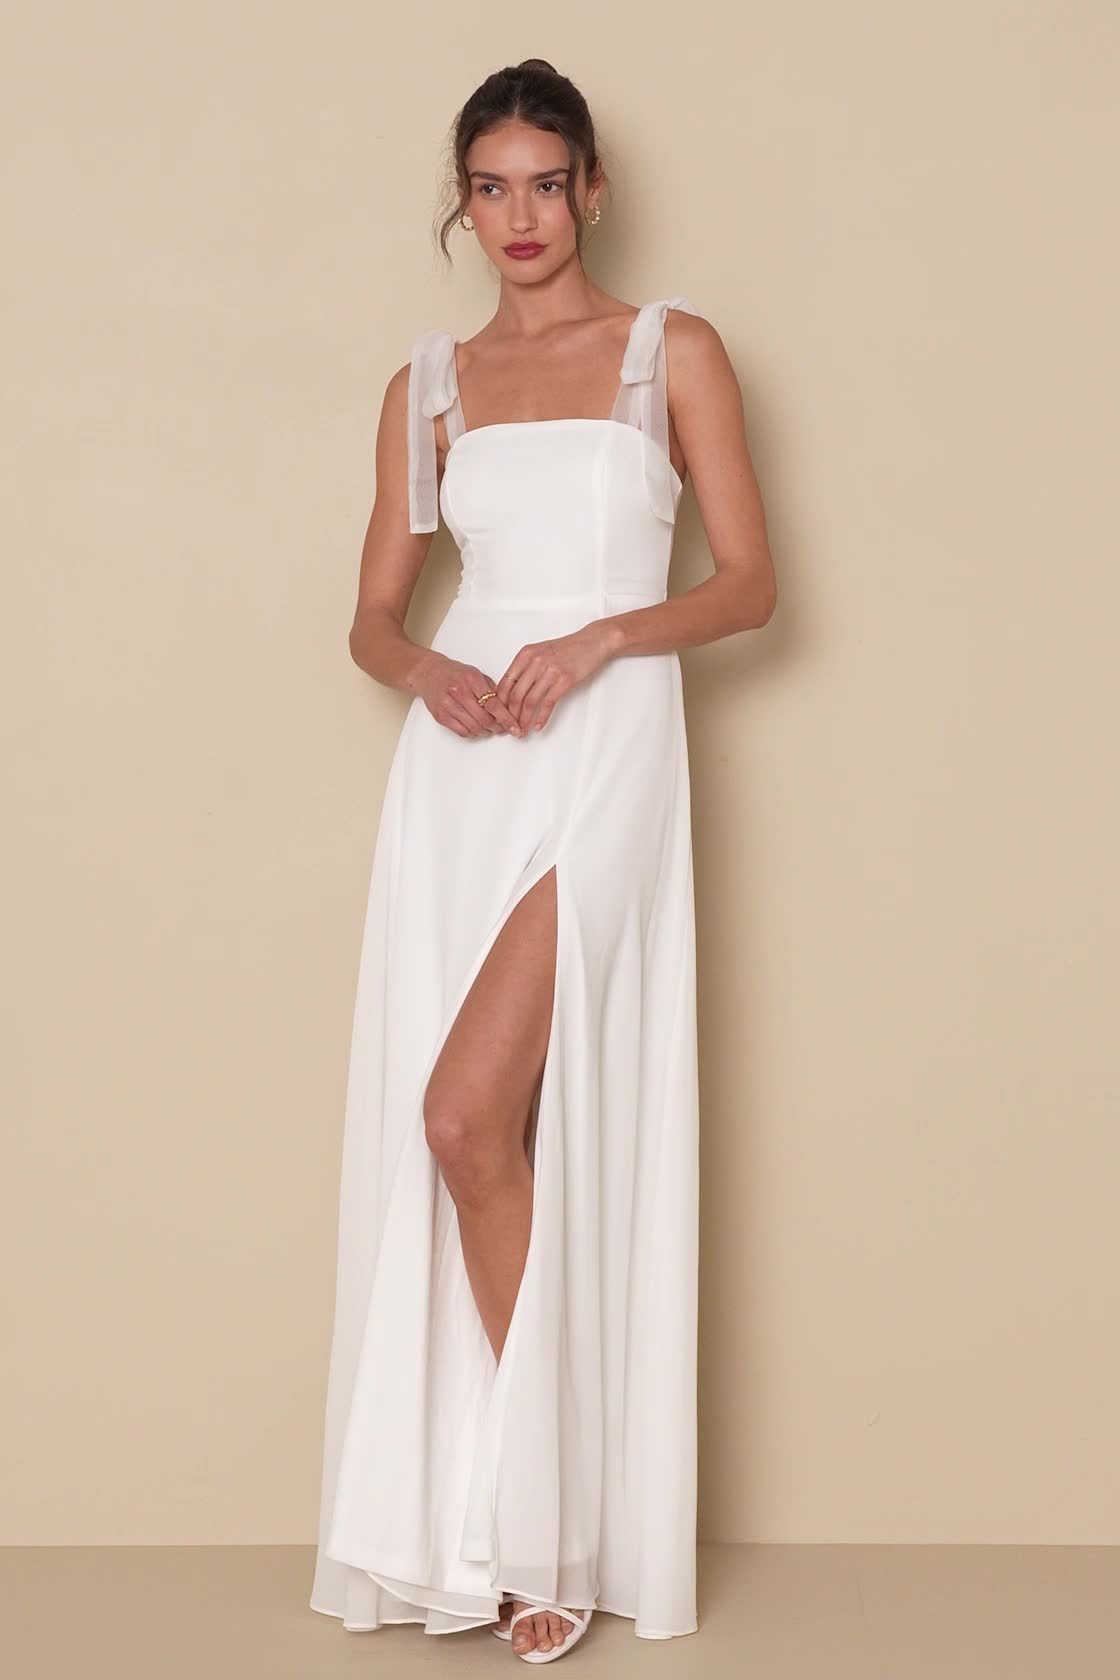 White Maxi Dress - Tie-Strap Maxi Dress - White A-Line Dress - Lulus